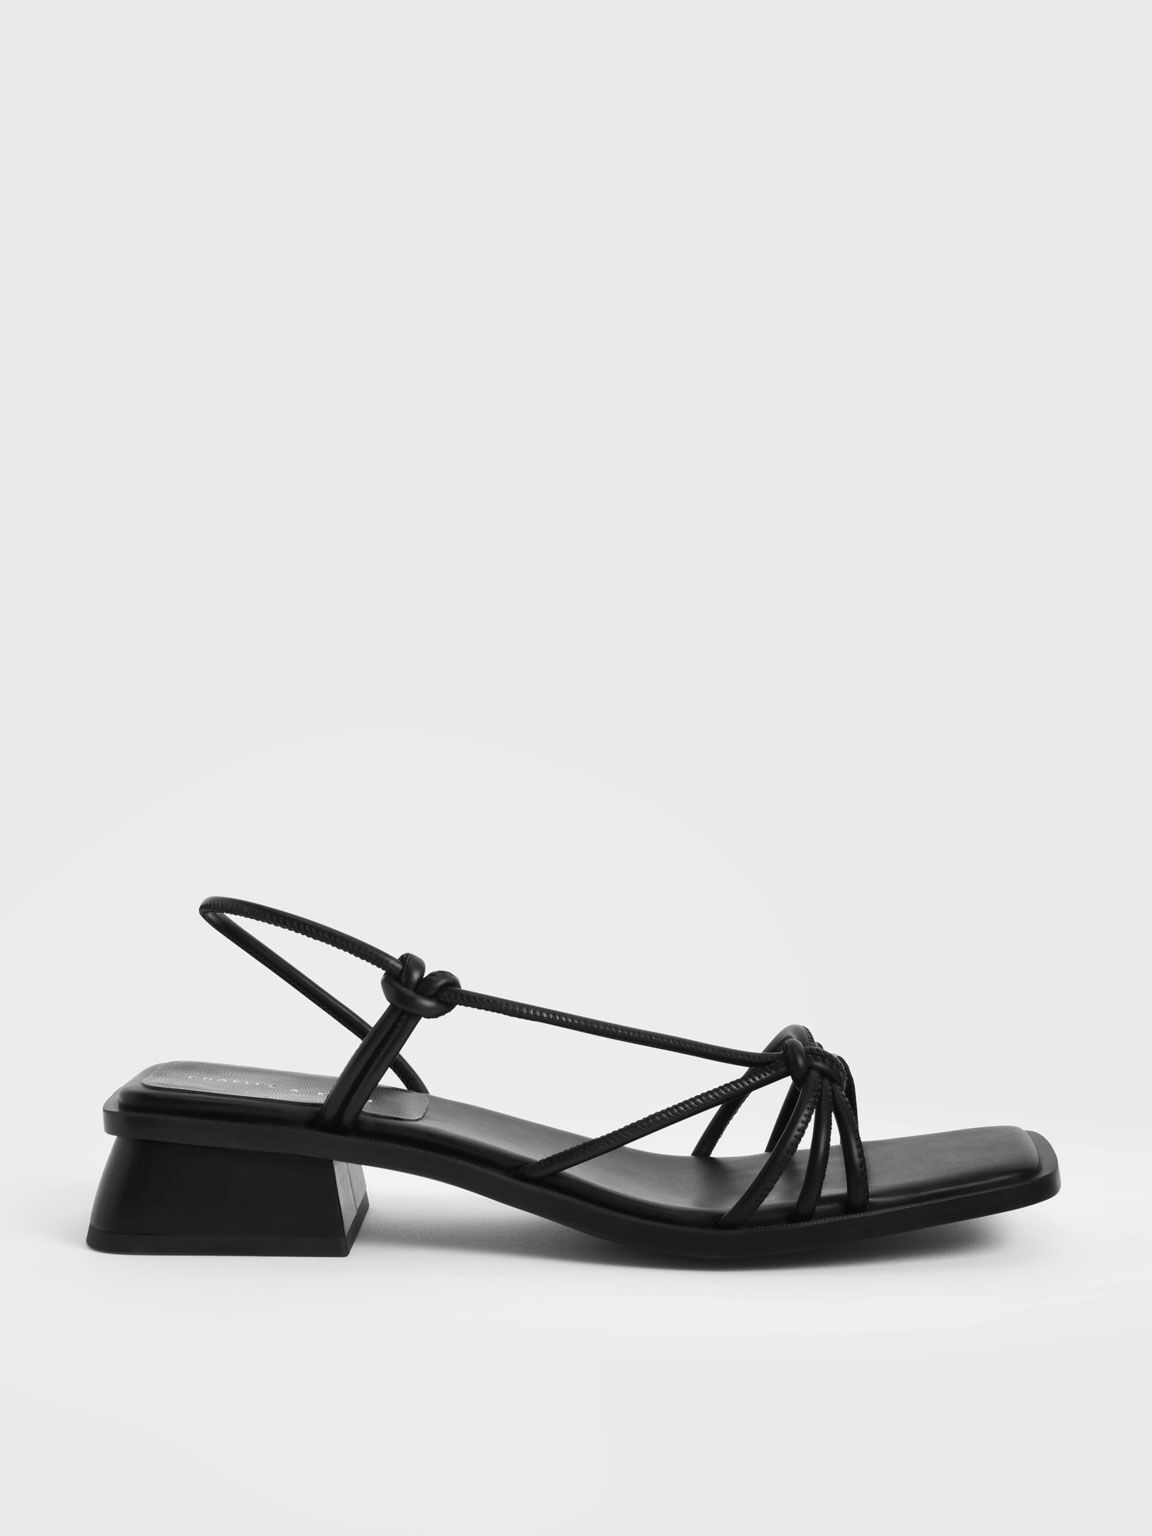 Strappy Knotted Slingback Sandals, Black, hi-res